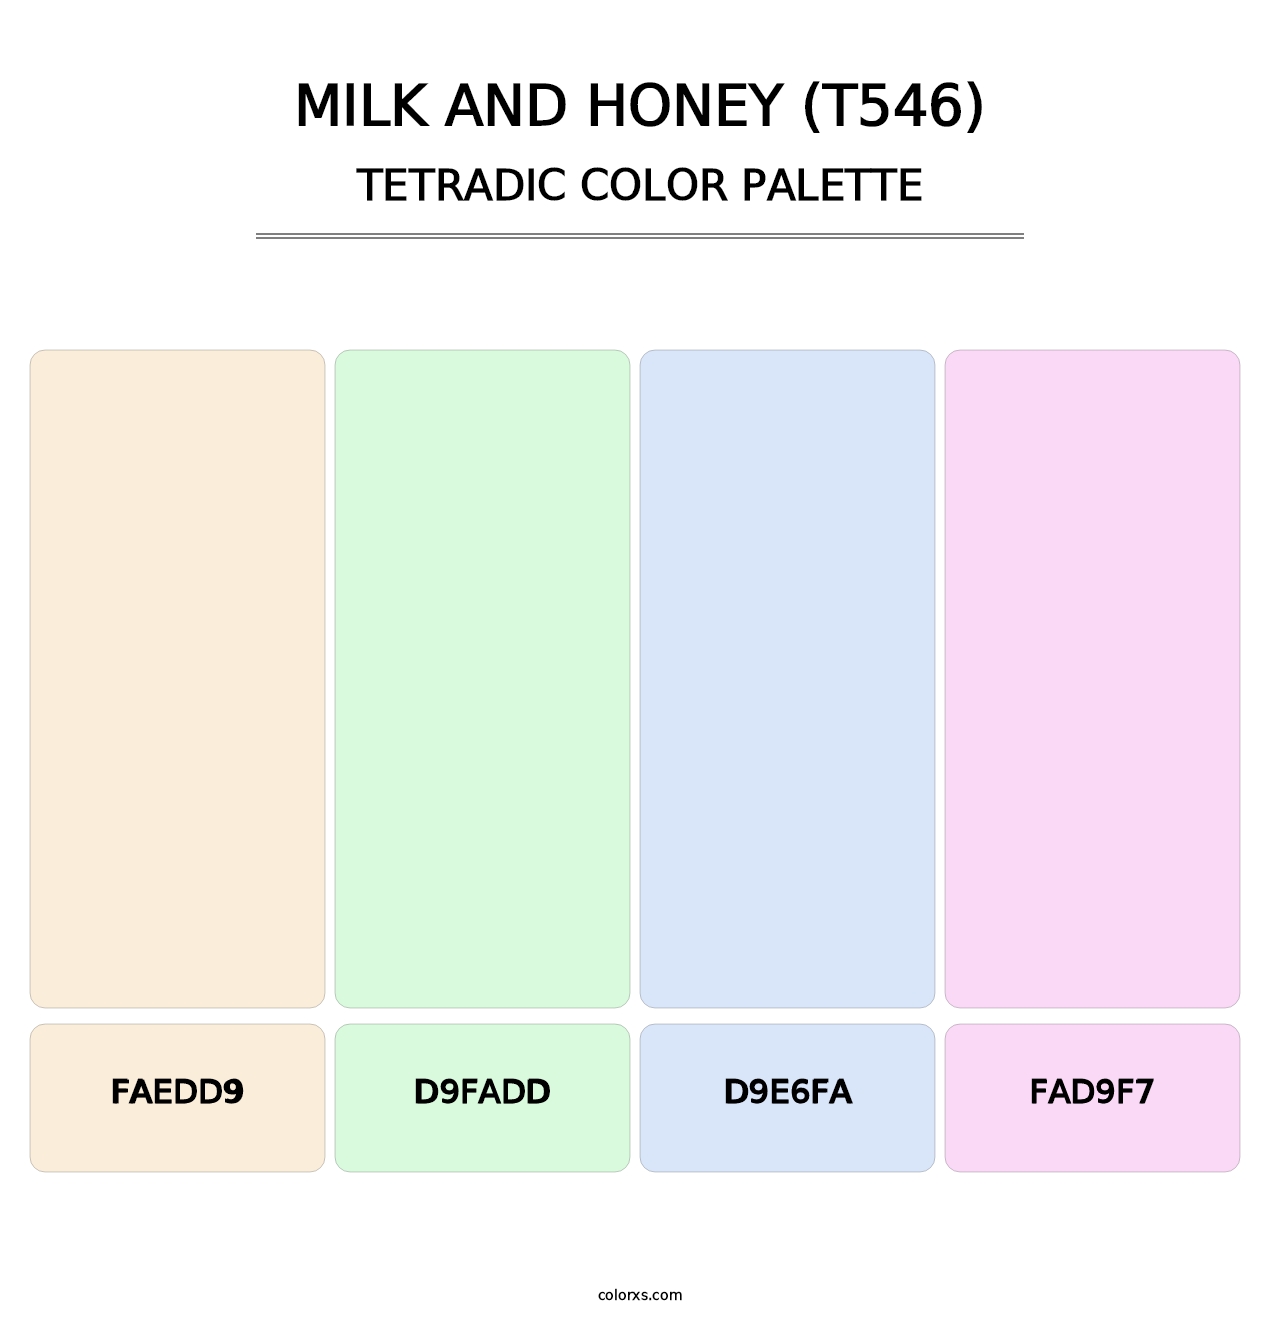 Milk and Honey (T546) - Tetradic Color Palette